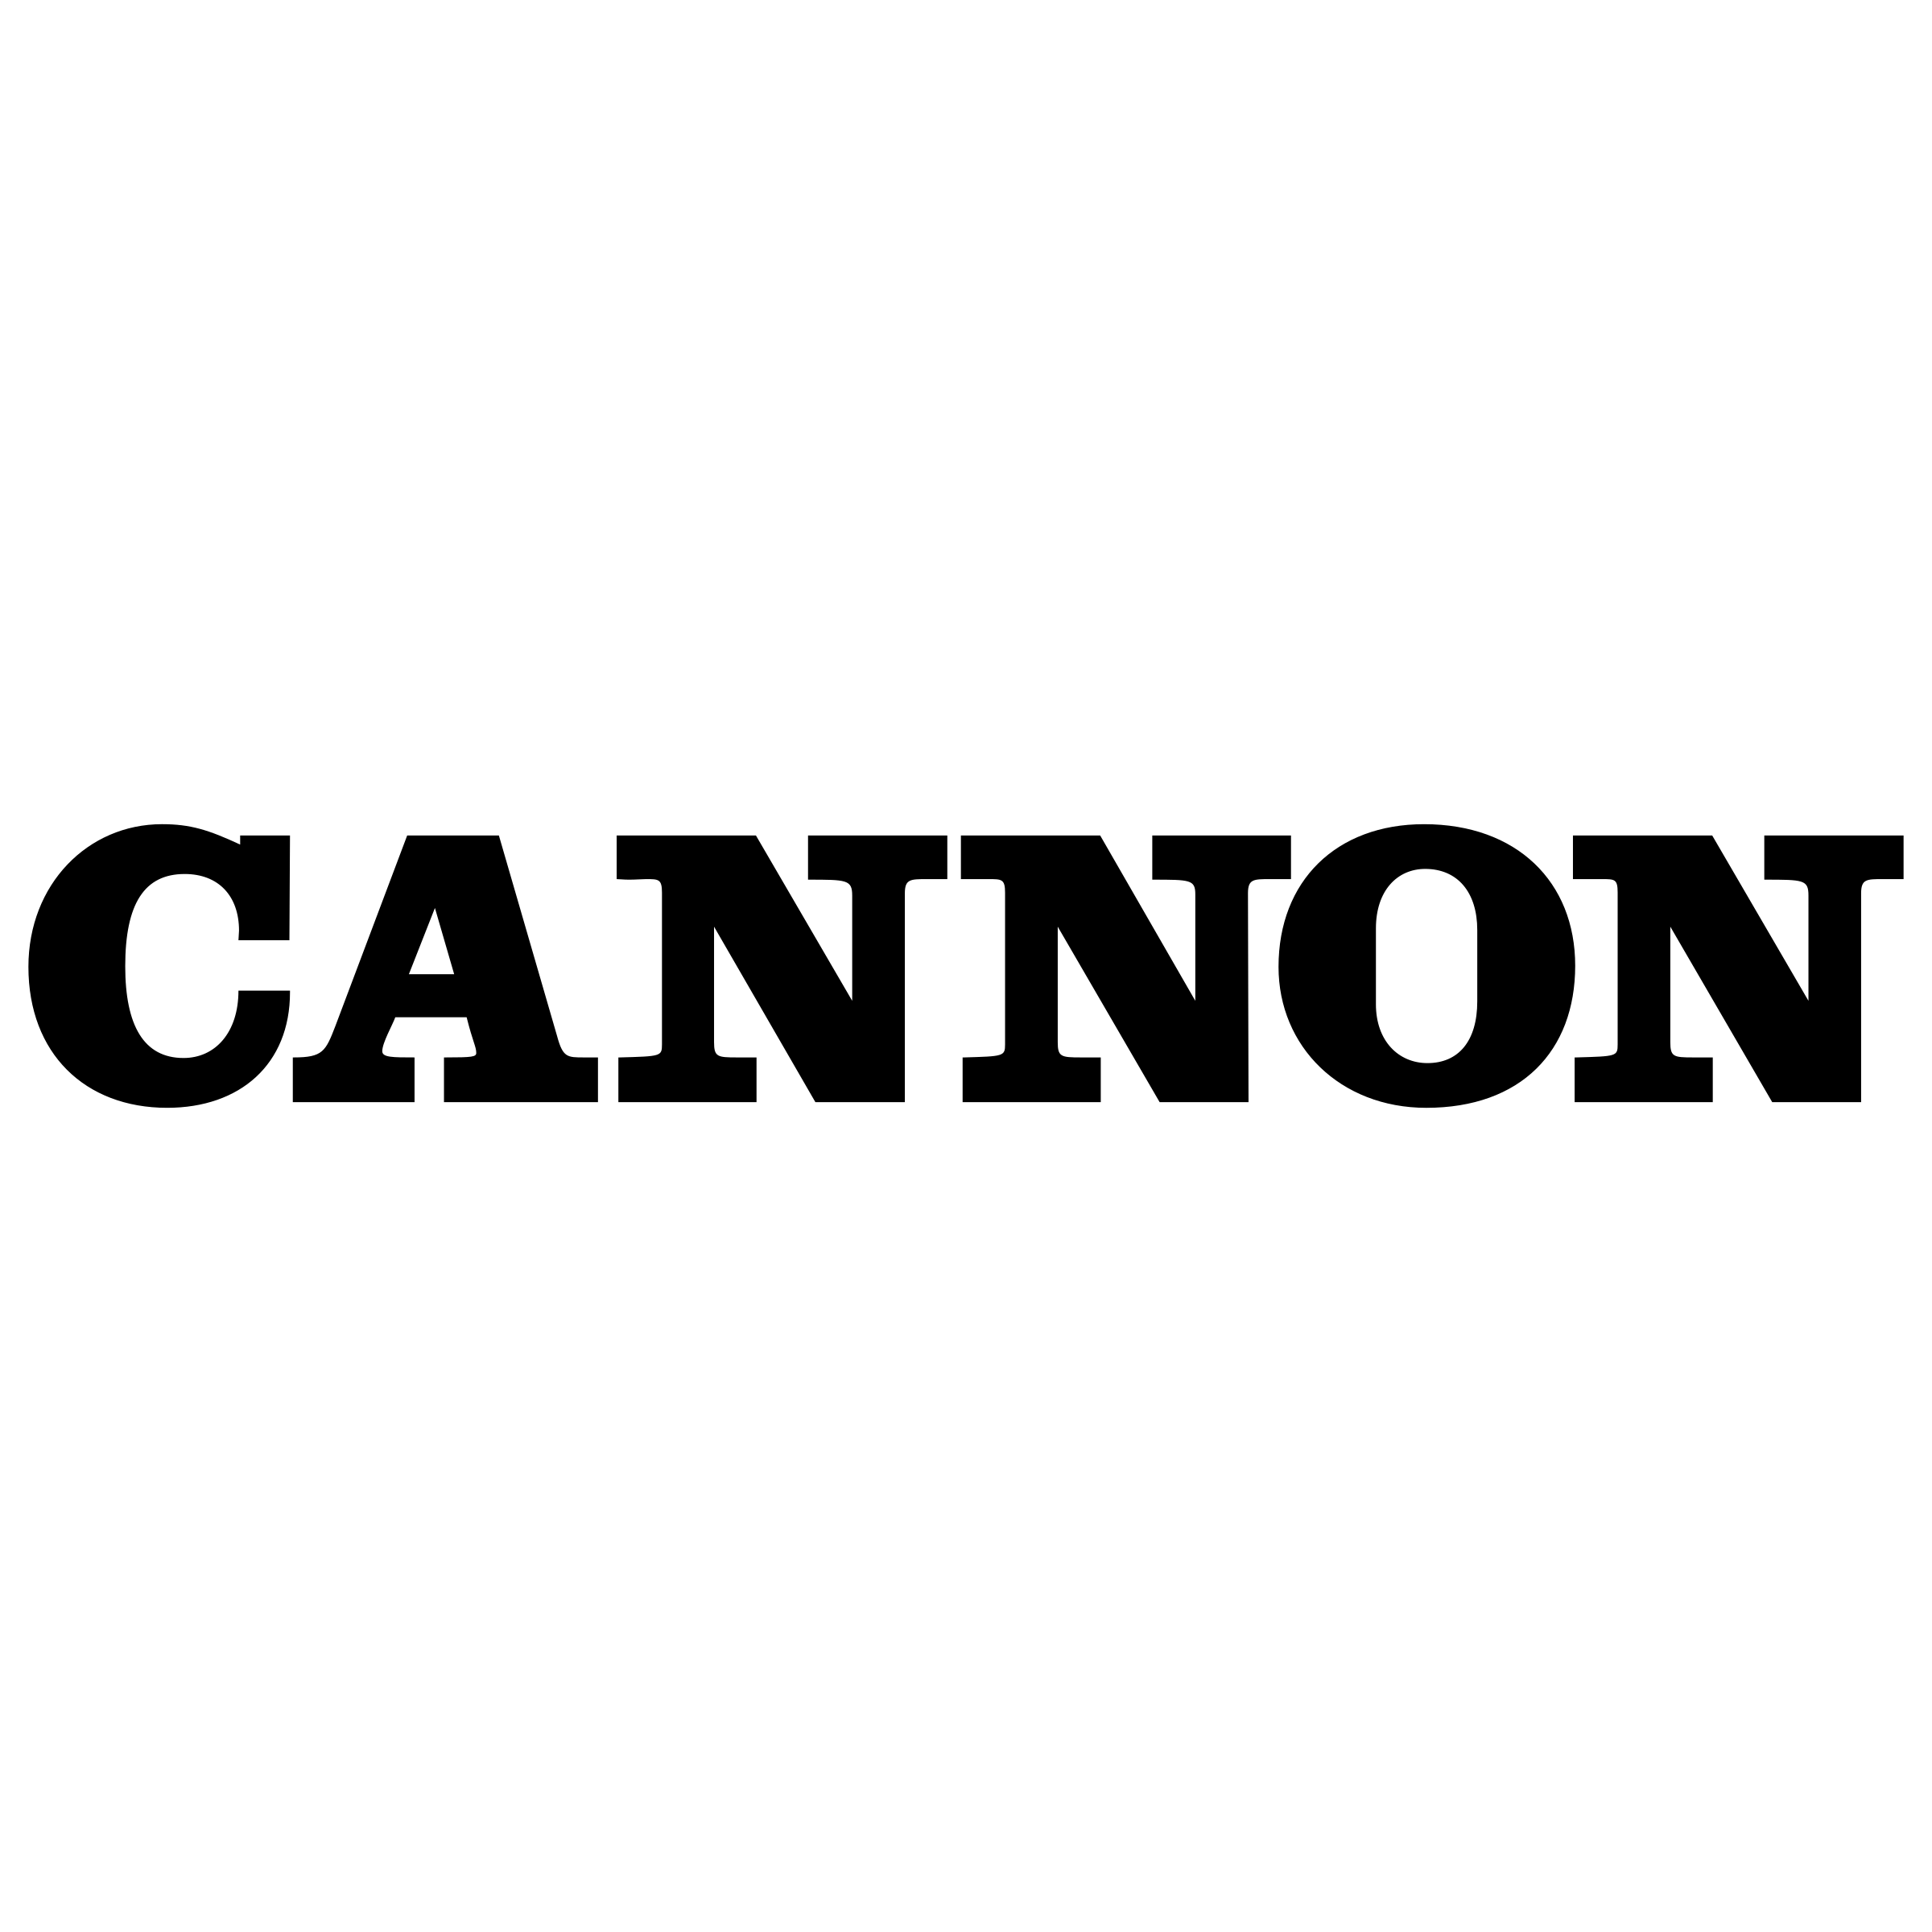 Cannon Logo - Cannon Logo PNG Transparent & SVG Vector